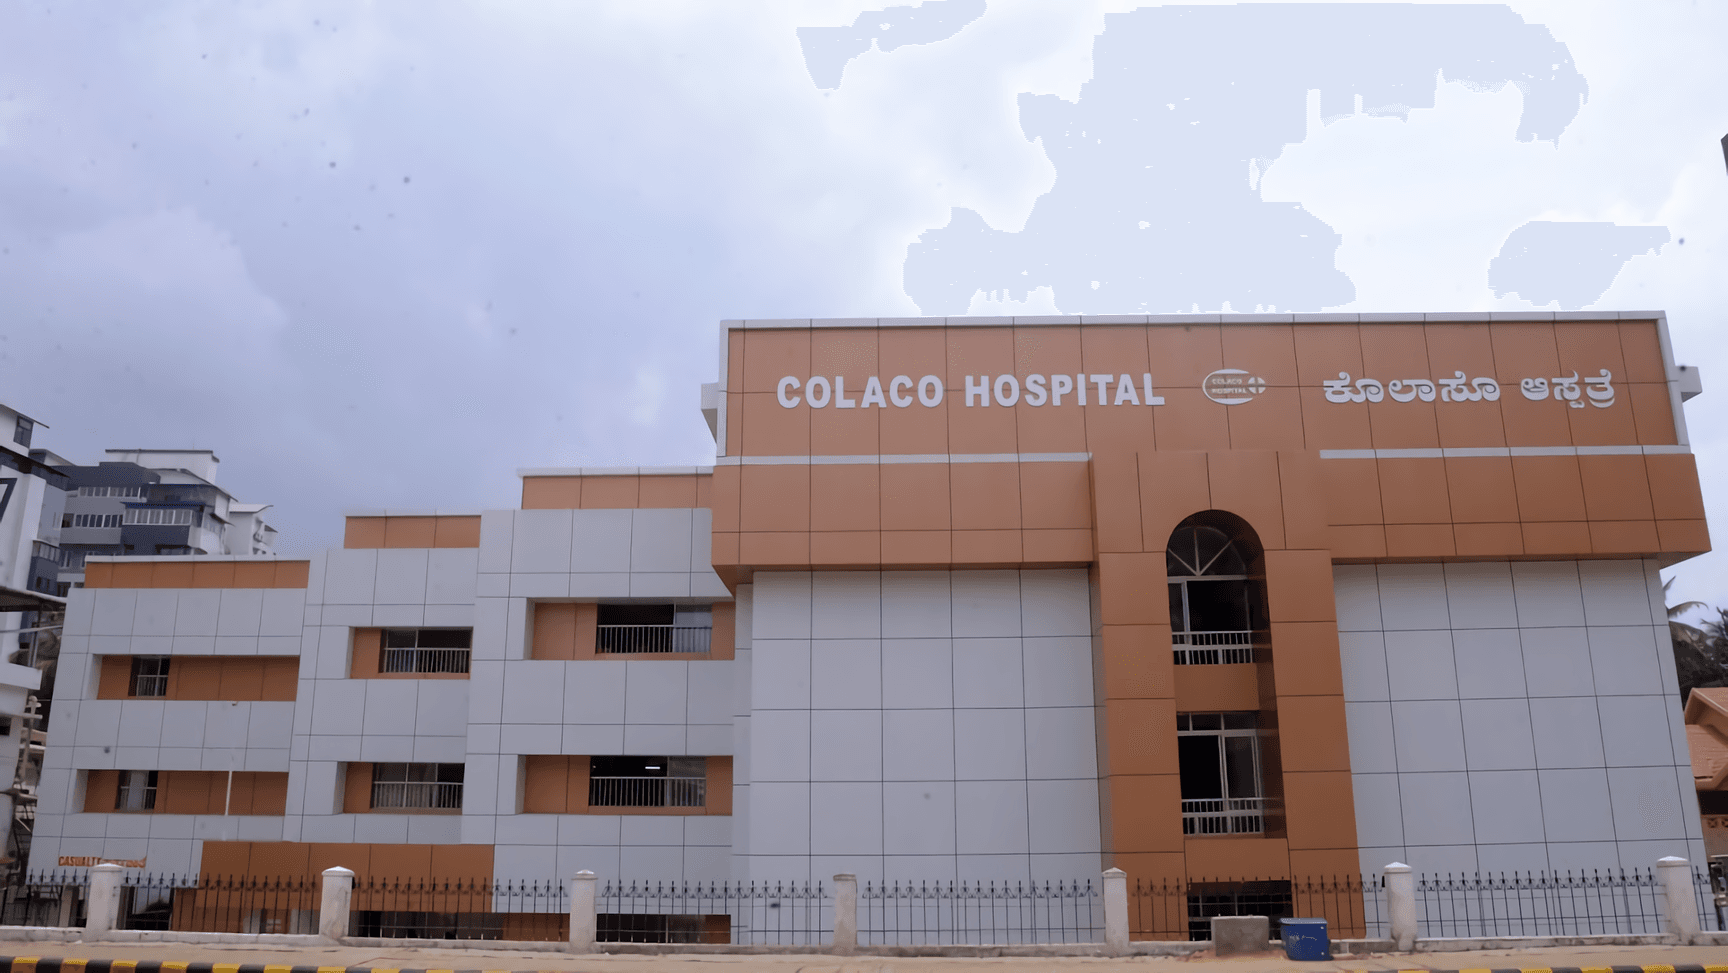 Colaco Hospital